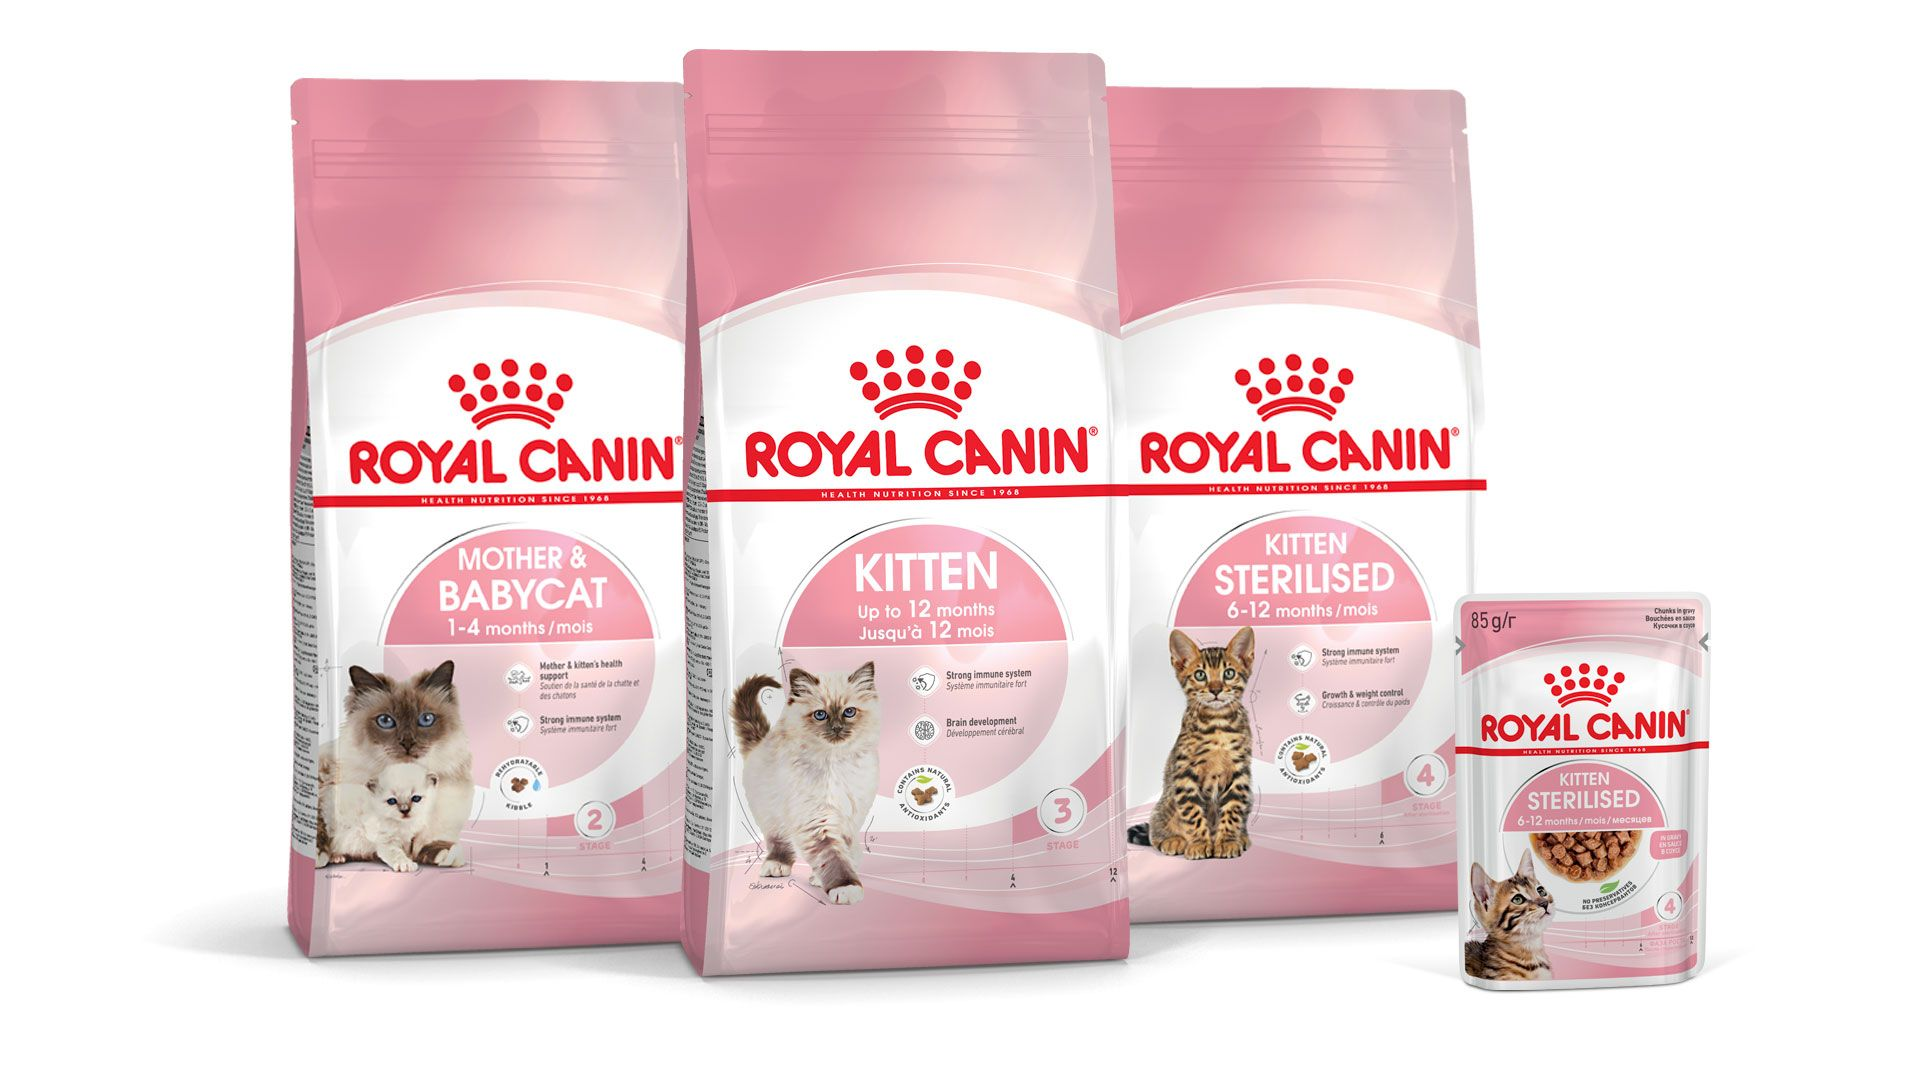 Royal Canin Kitten Growth Program range